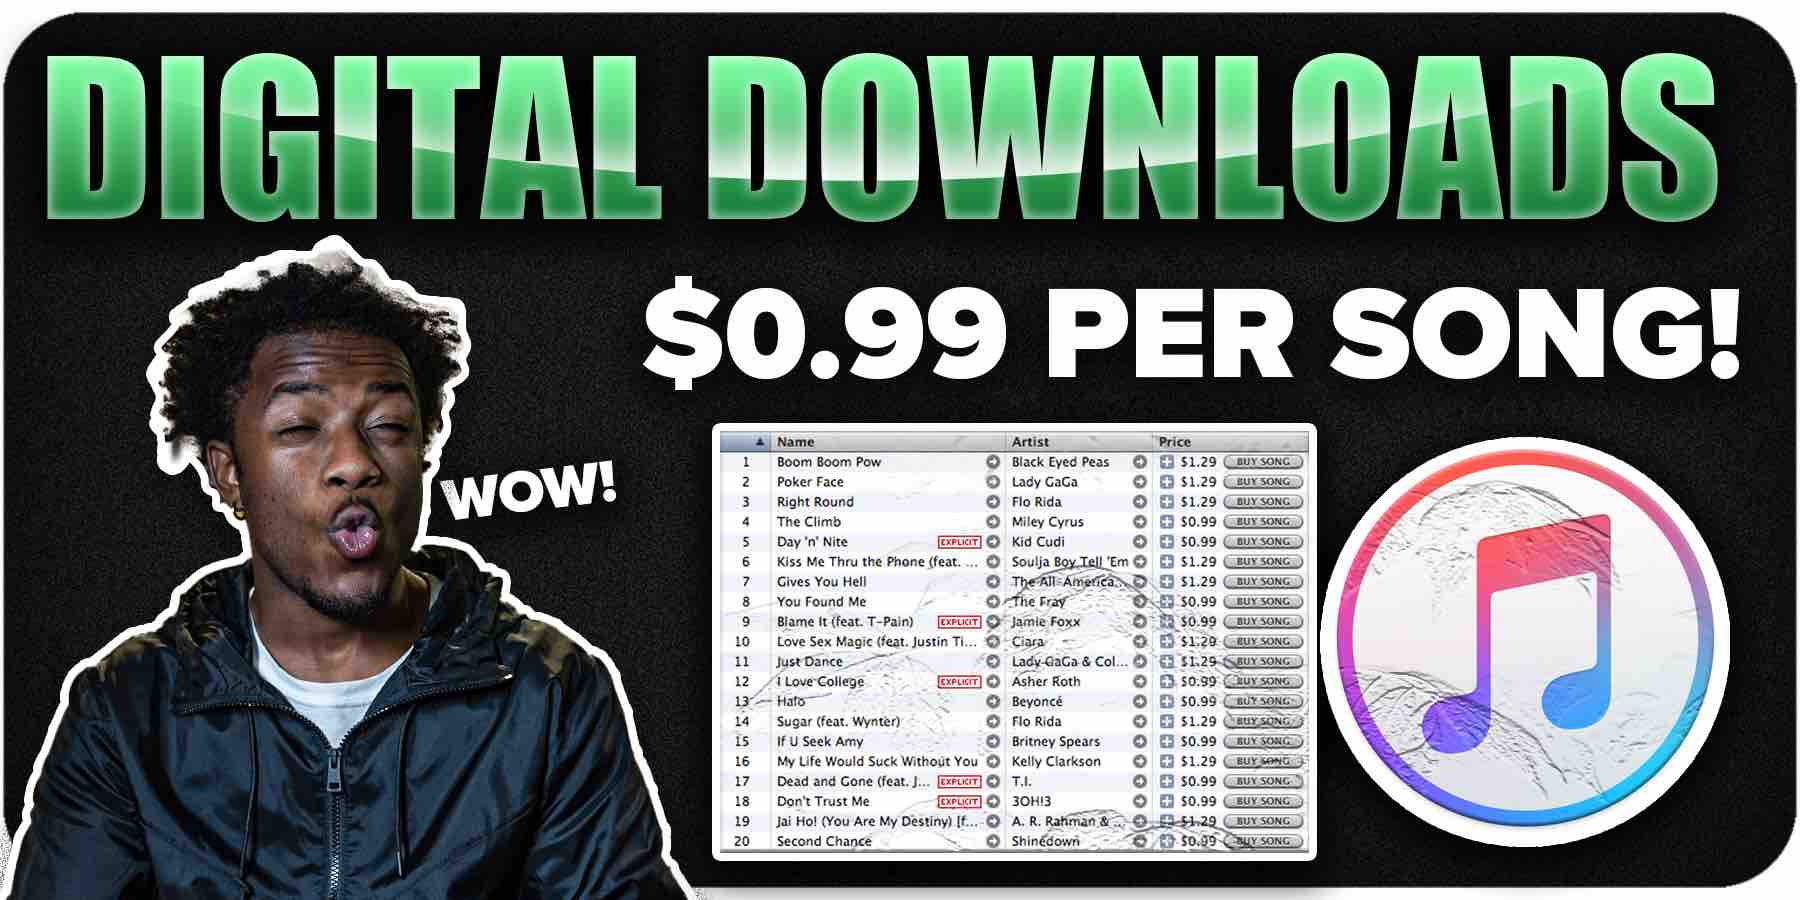 Digital download itunes sales